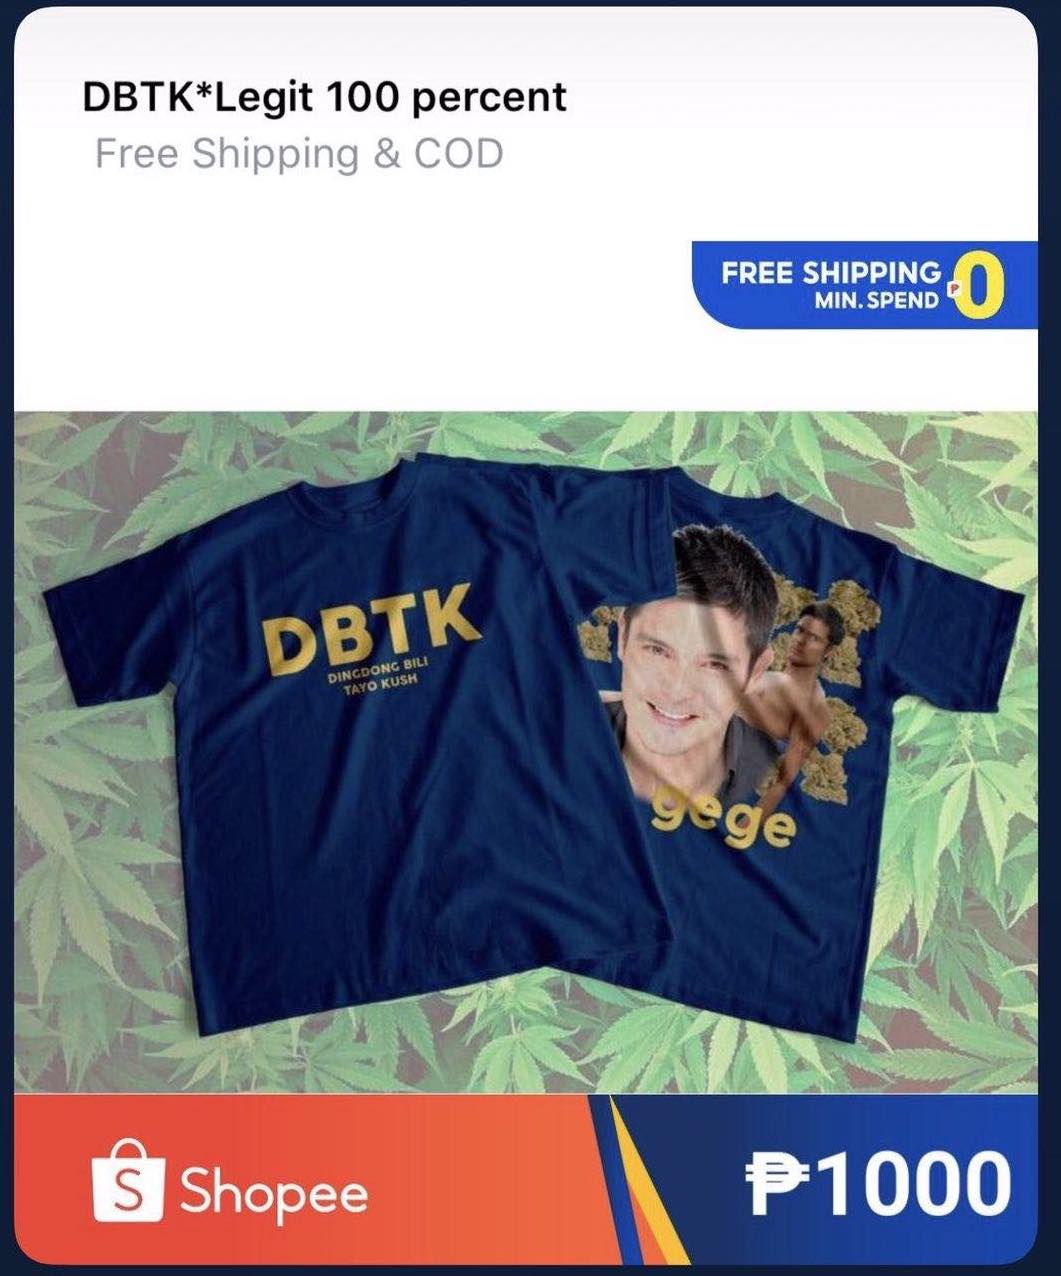 For sale on Shopee A DBTK Dingdong Bili Tayo Kush shirt - 004